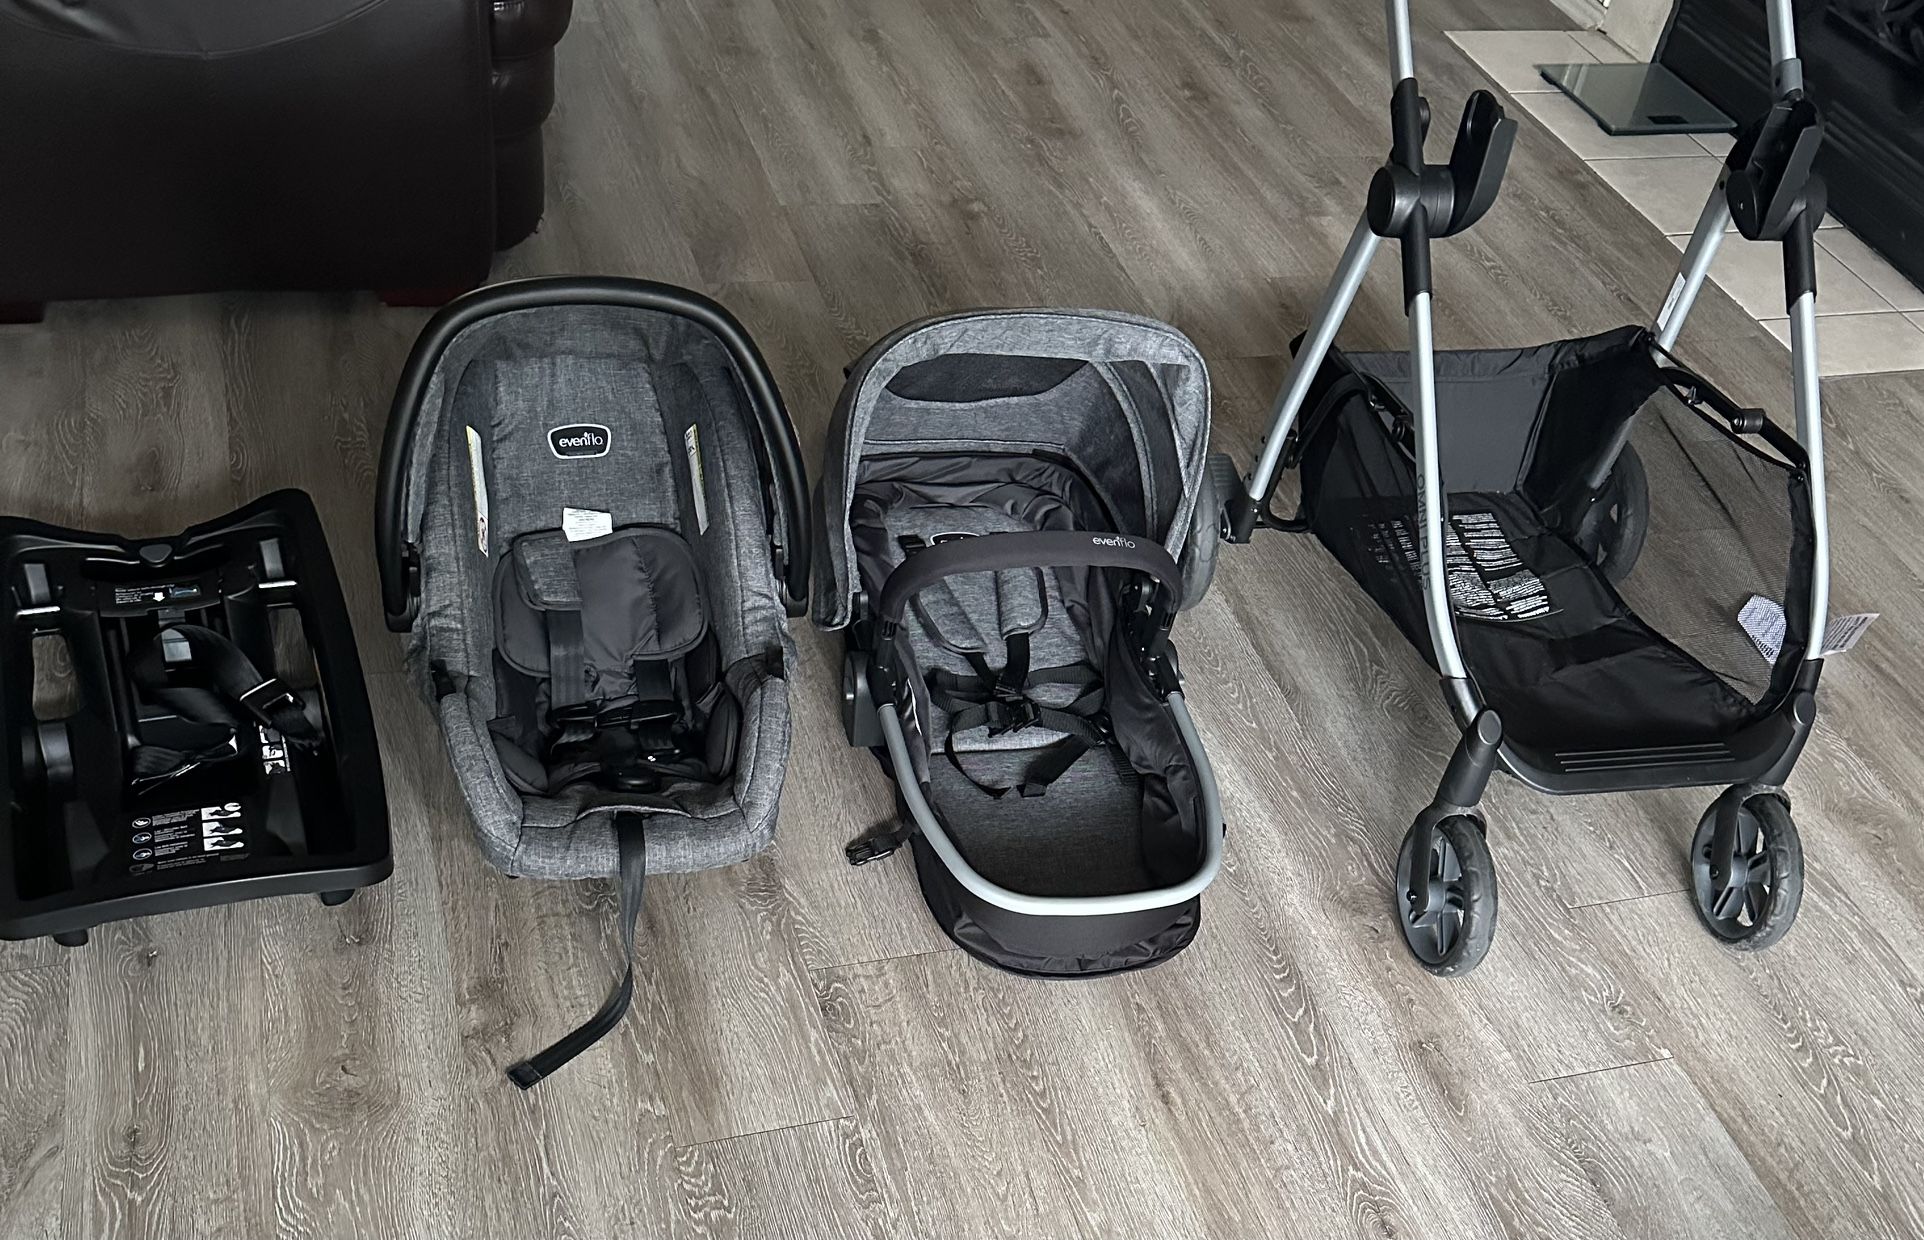 Even Flo Baby Stroller Including Car seat -$150